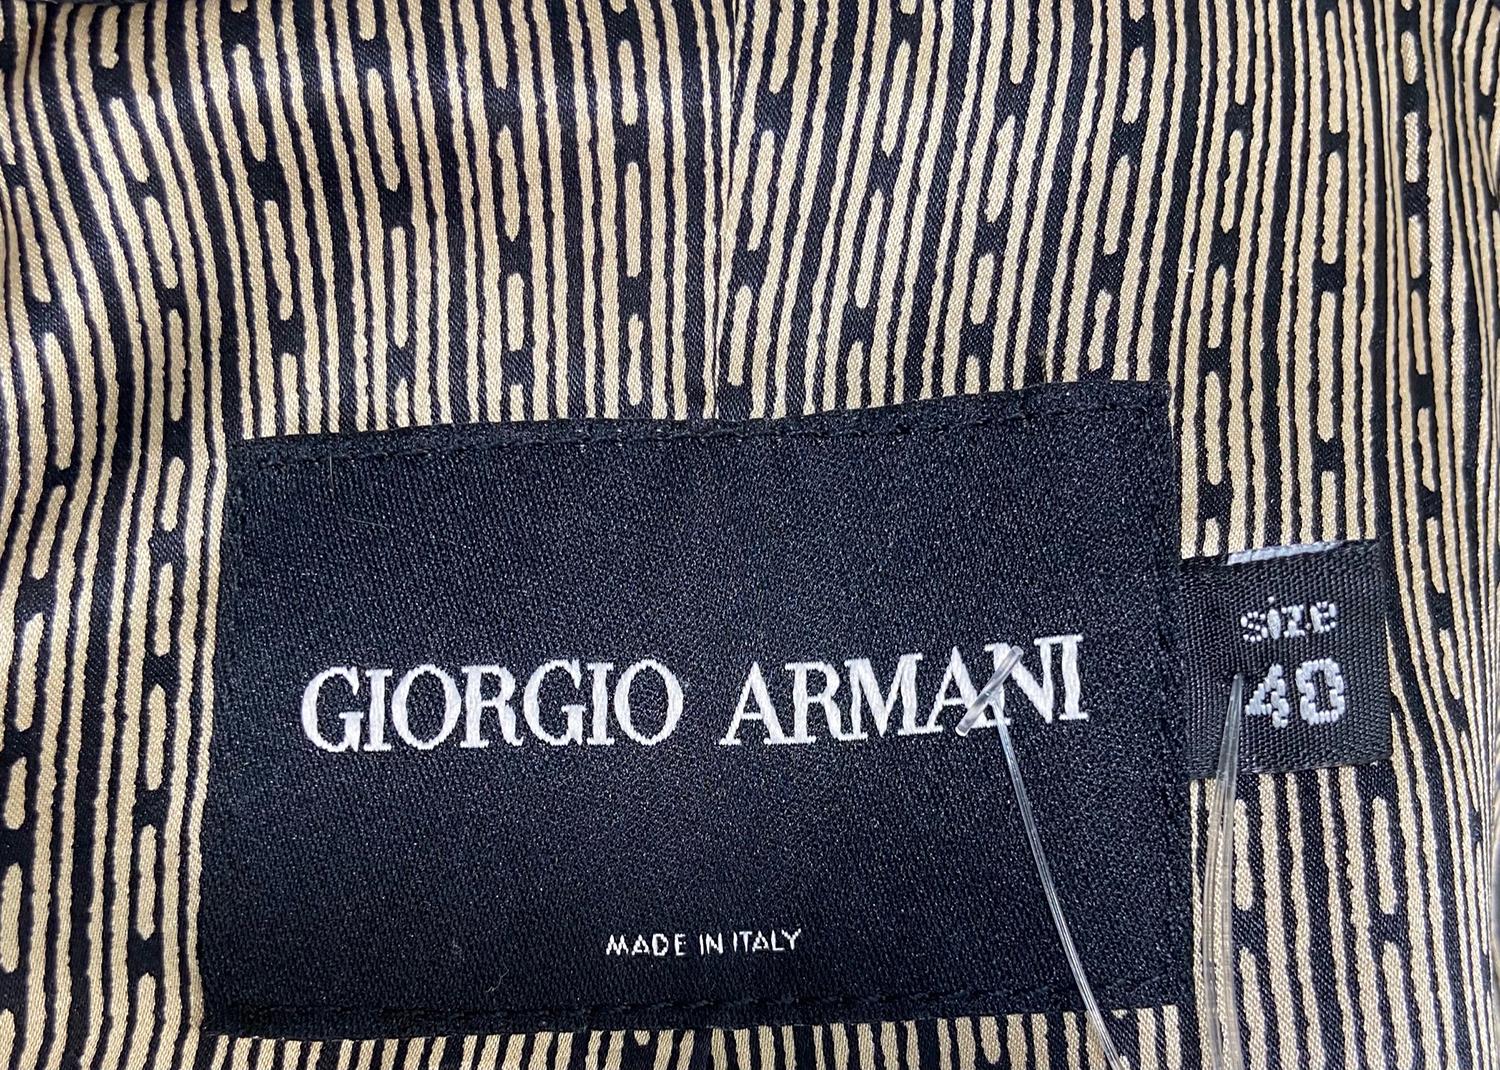 Giorgio Armani Sheared Lamb with Leather Facings in Black & Brown Jacket 6